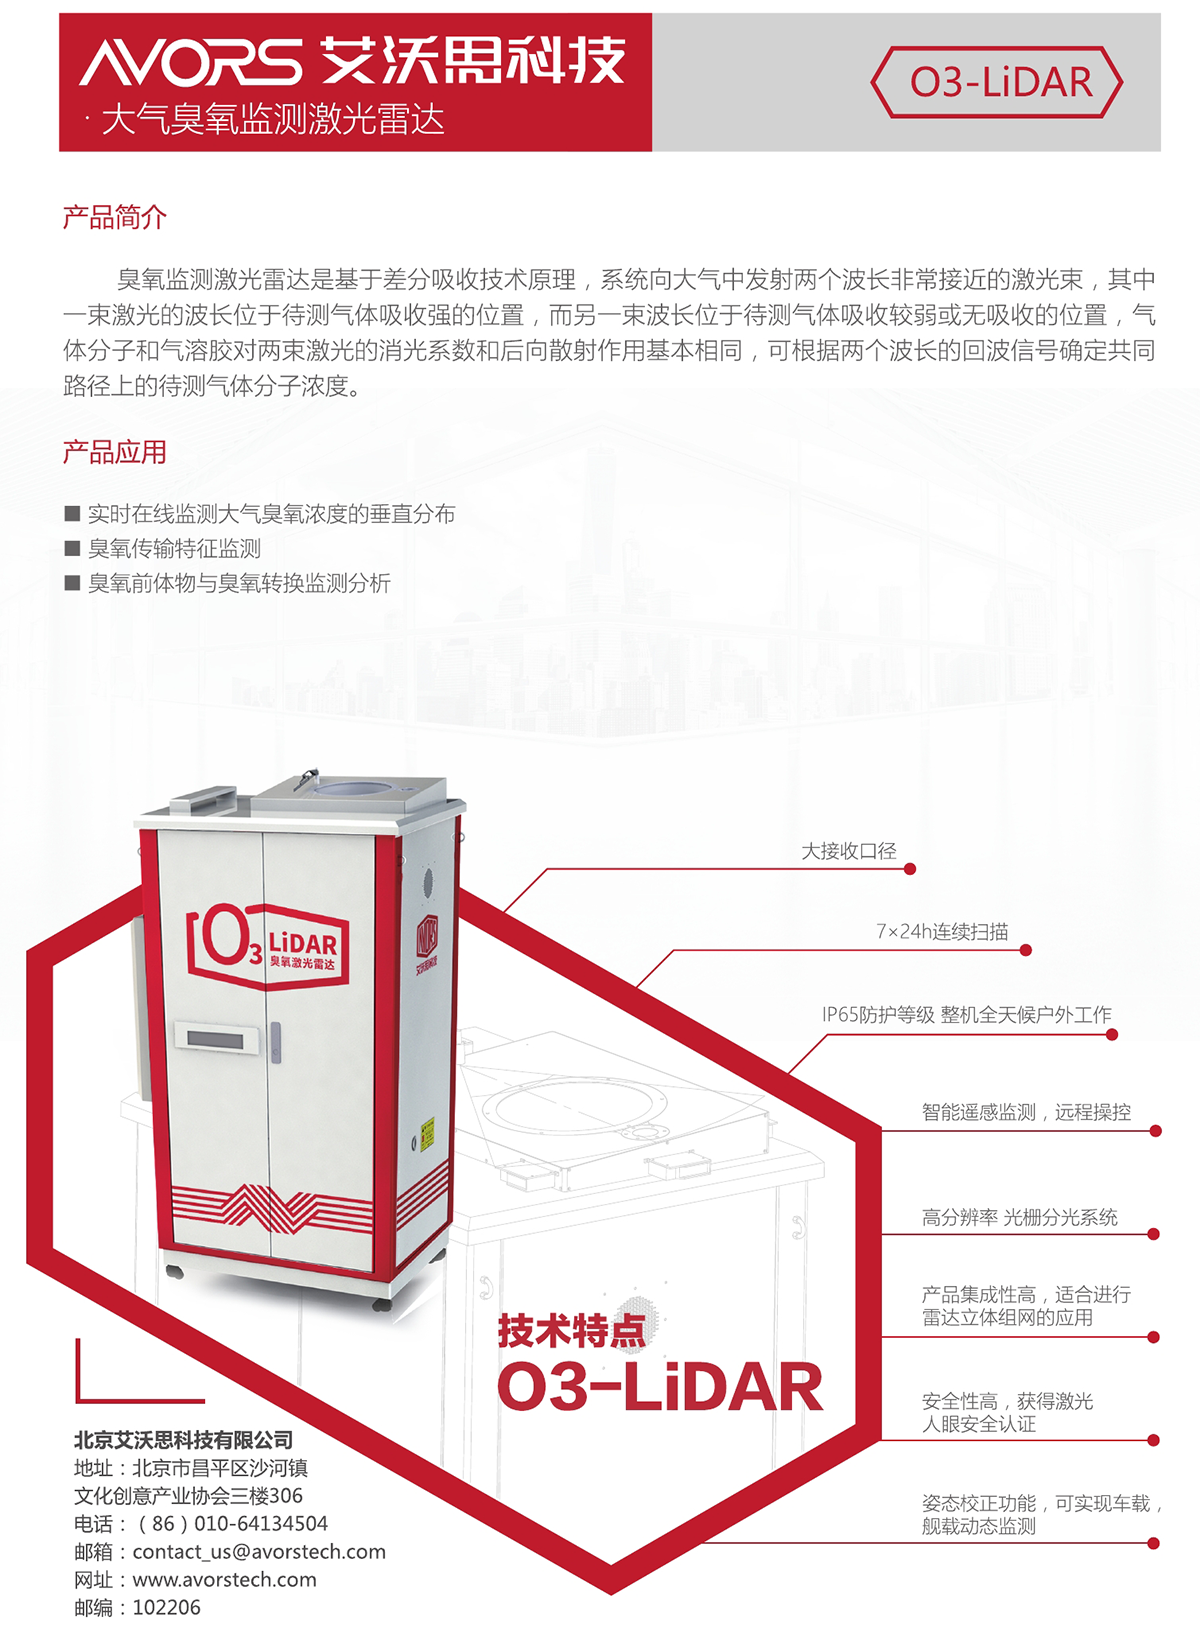 O3-LIDAR 大气臭氧监测激光雷达